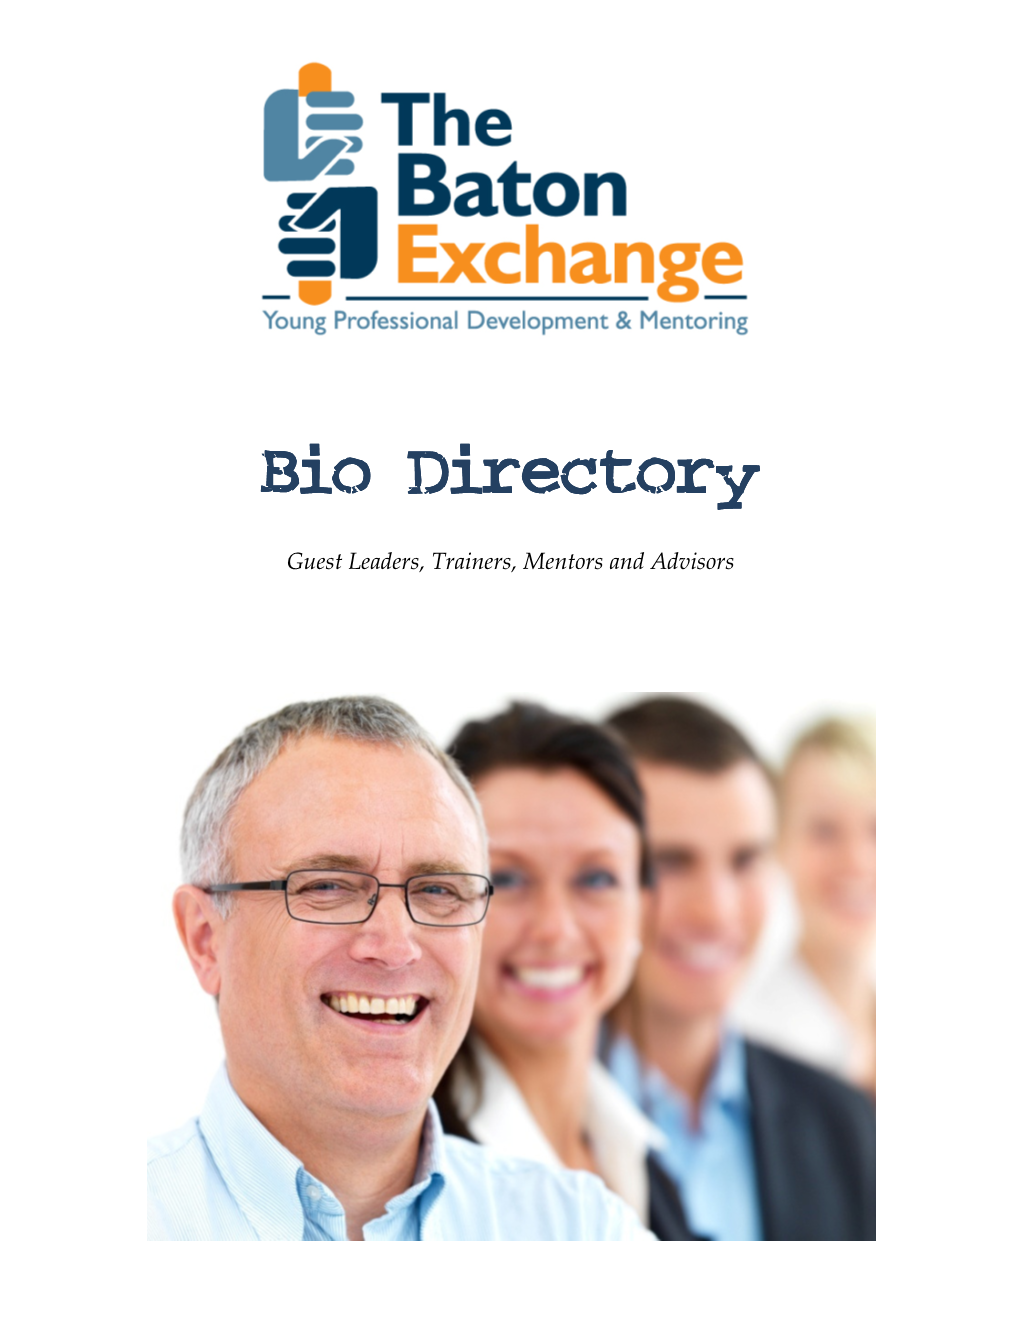 Bio Directory Bio Directory